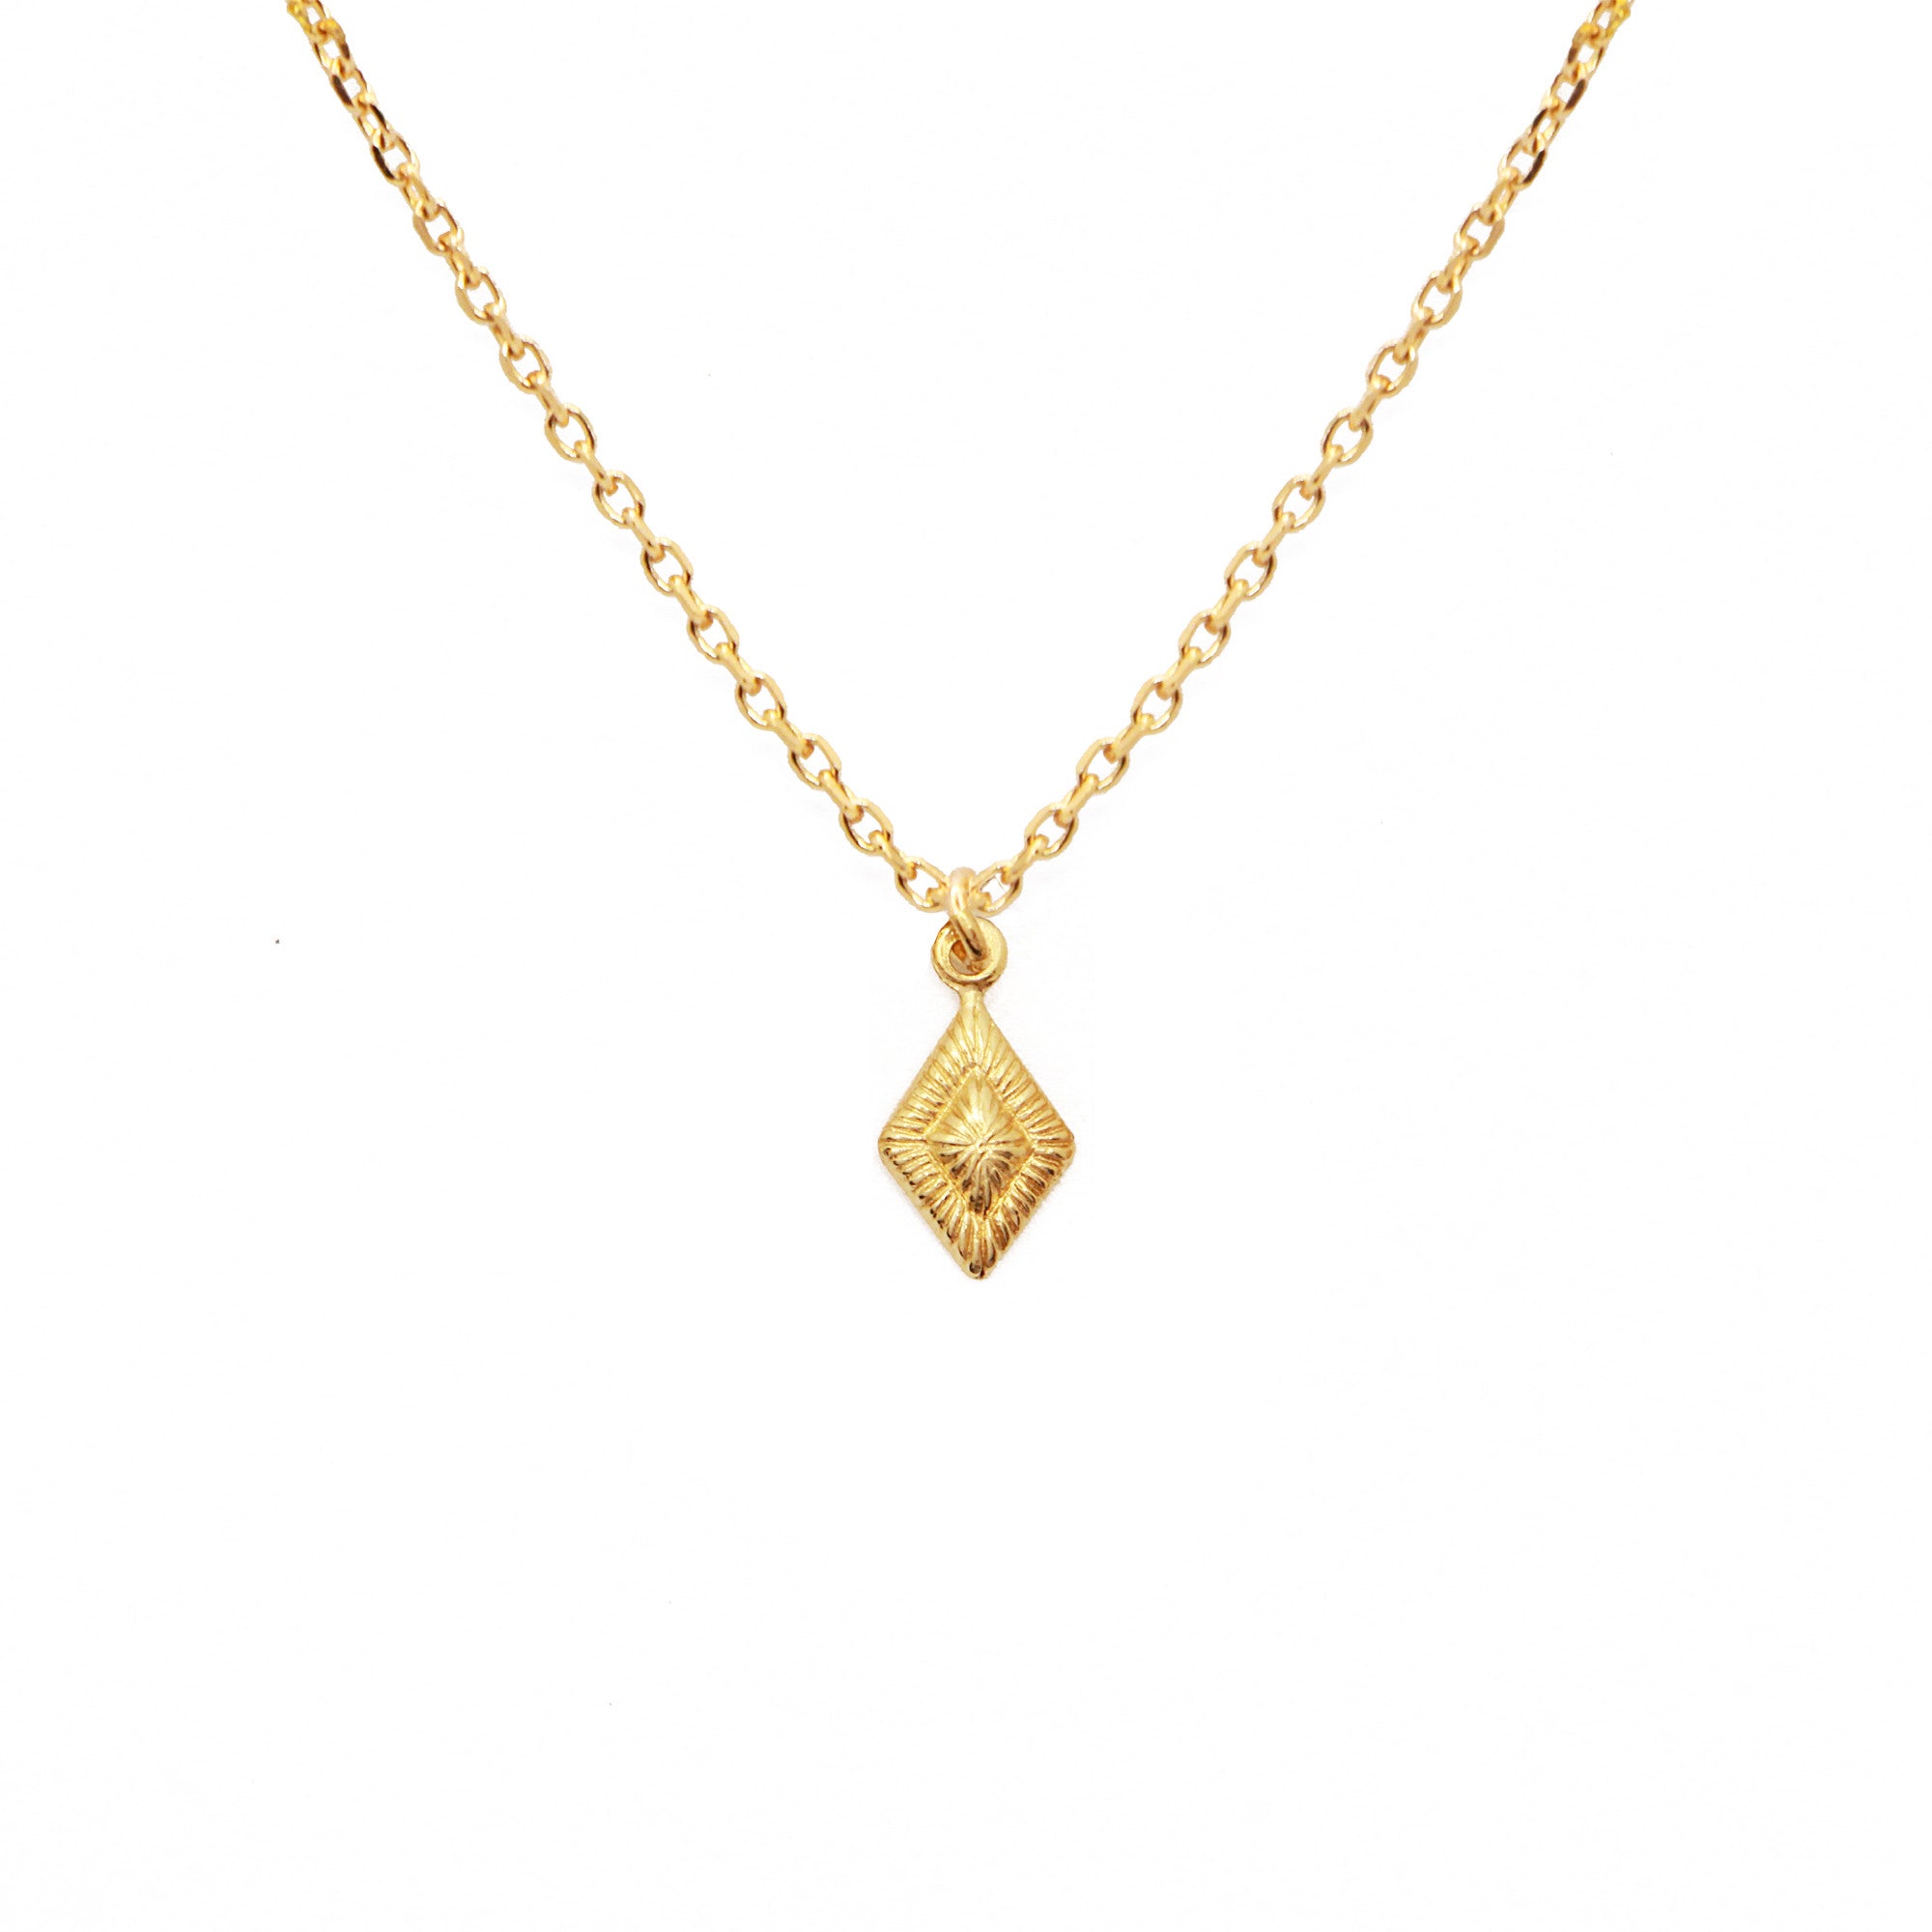 Diamond charm chain necklace